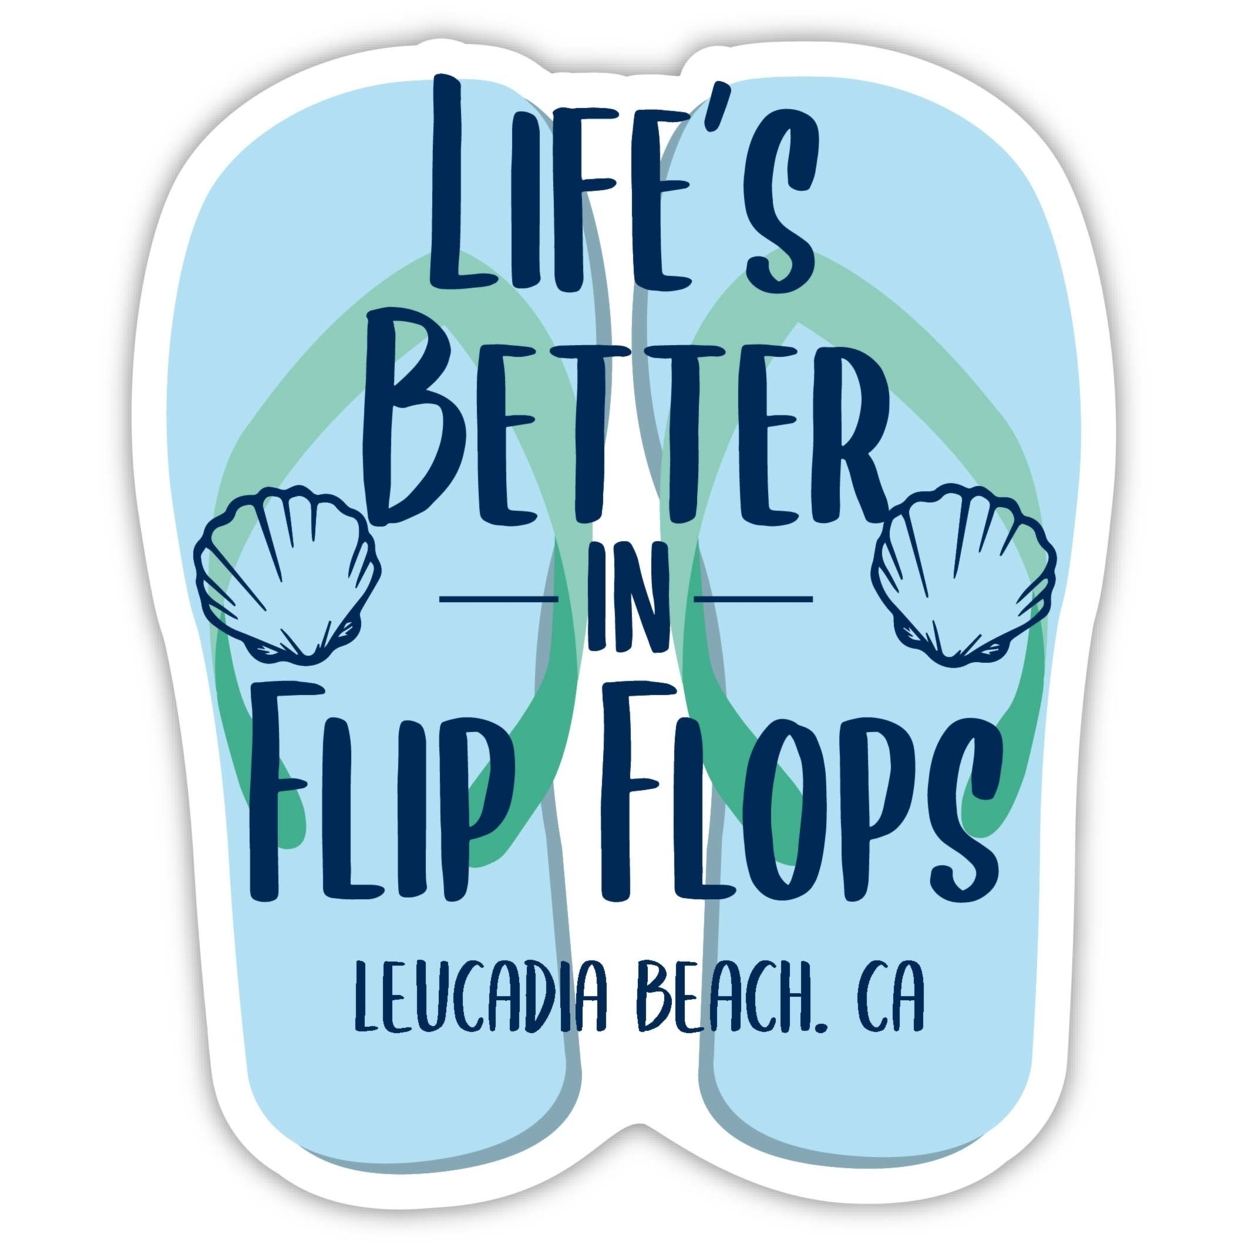 Leucadia Beach California Souvenir 4 Inch Vinyl Decal Sticker Flip Flop Design